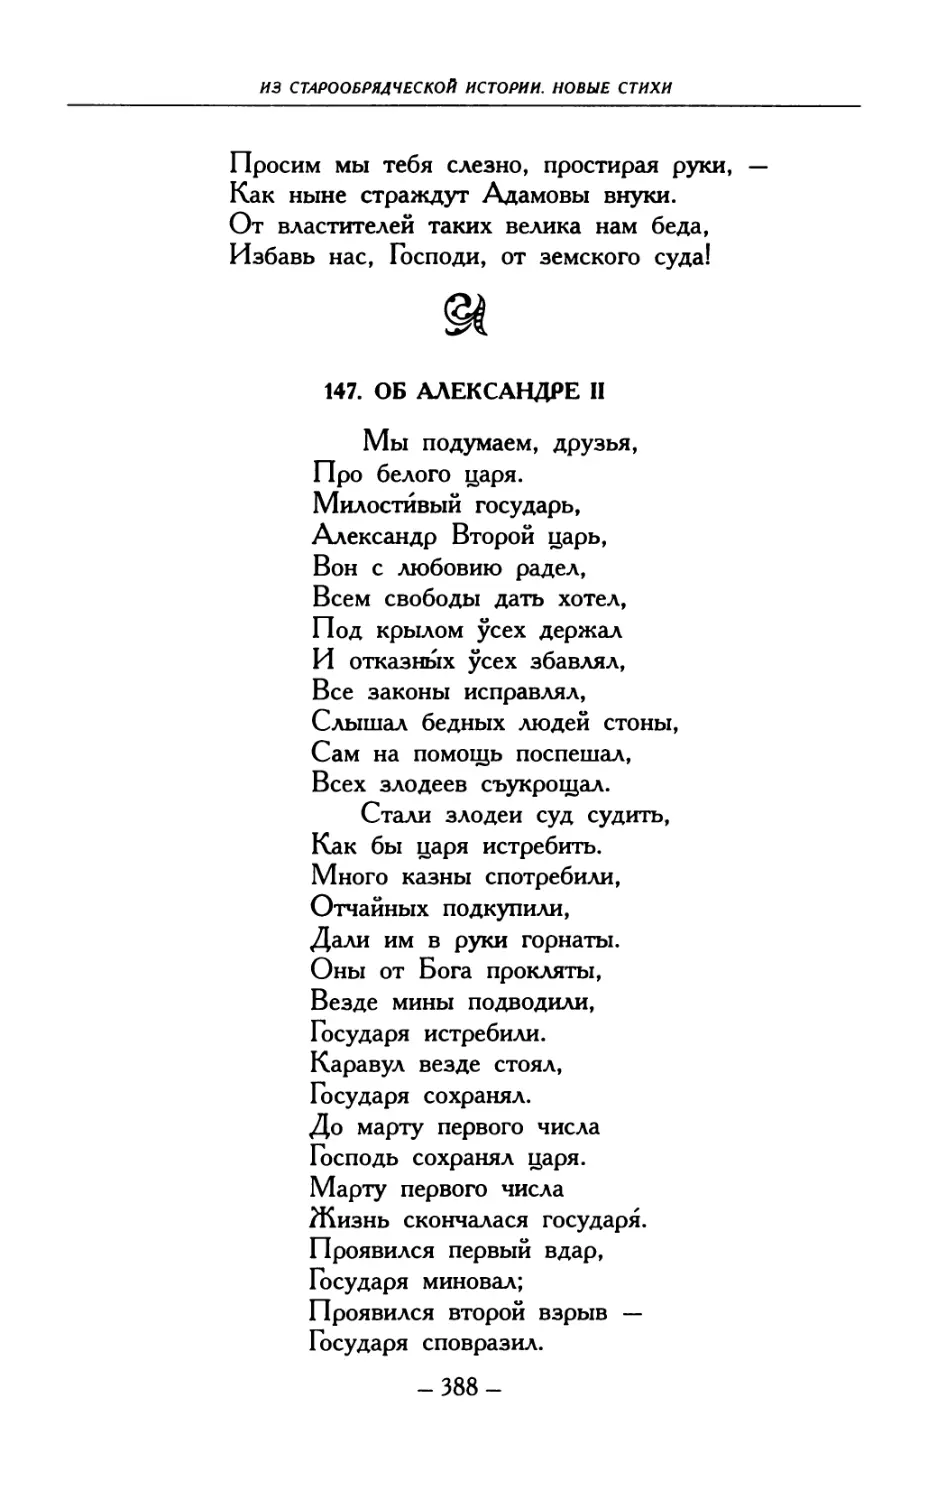 147. Об Александре II